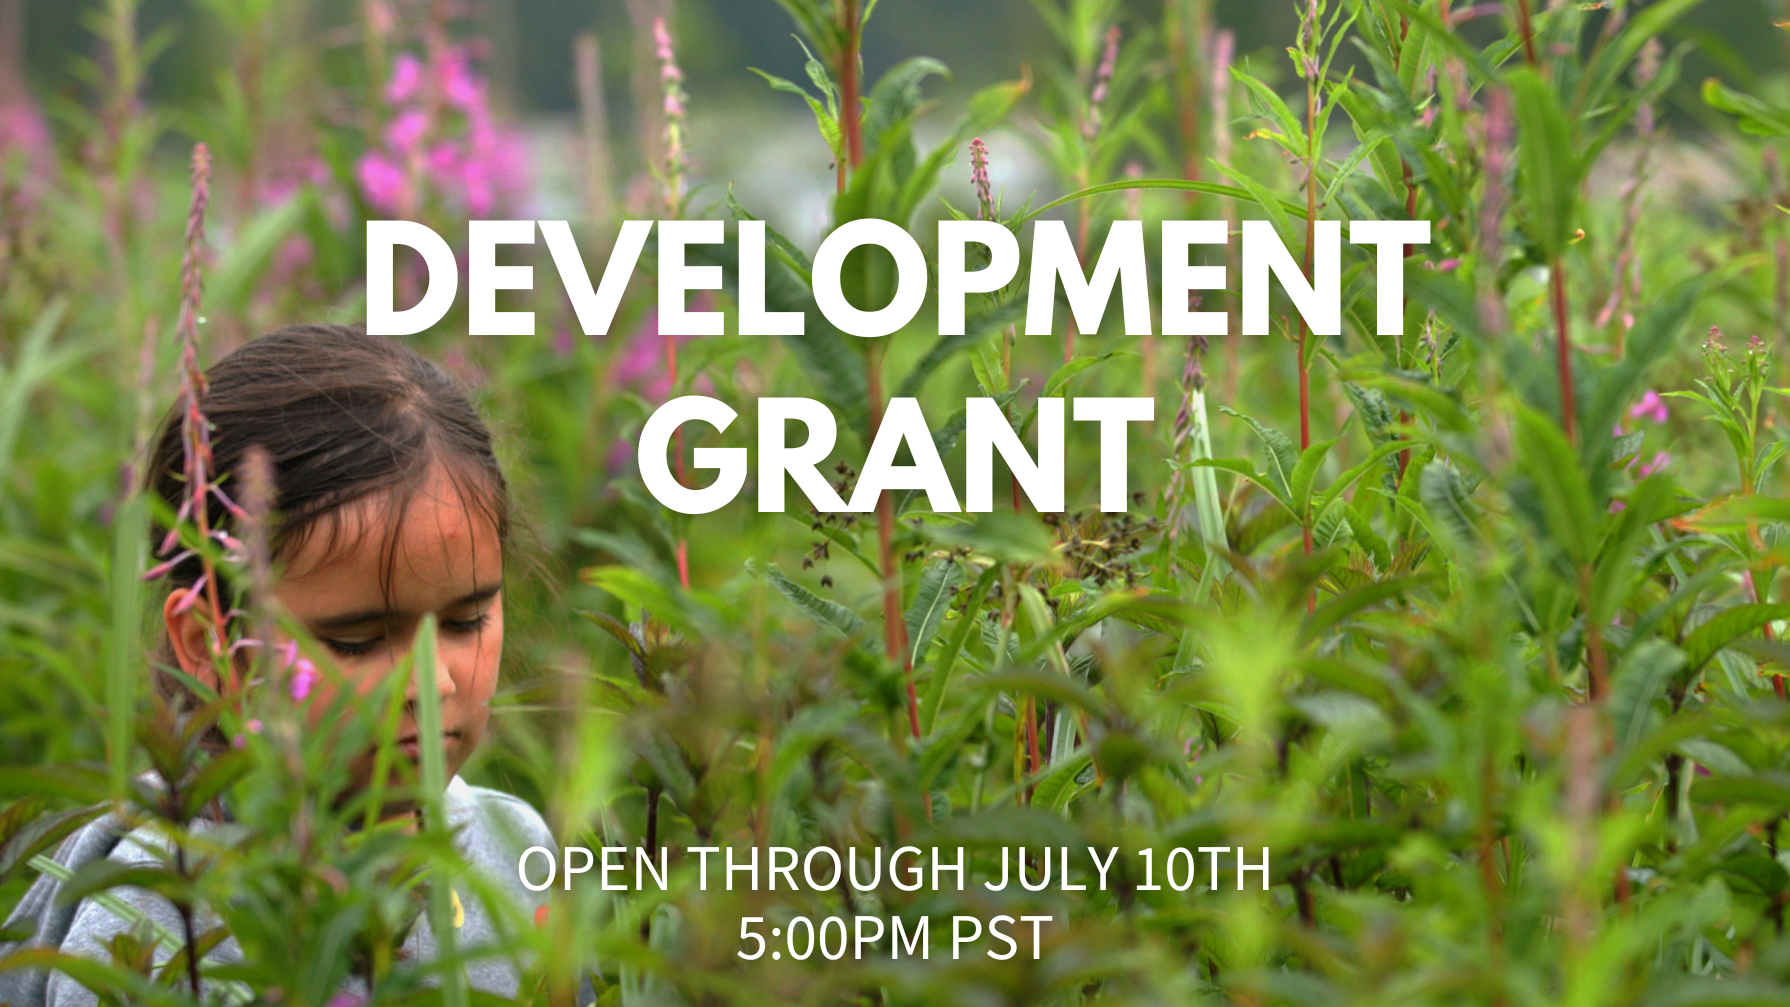 Development Grant open through 7/10